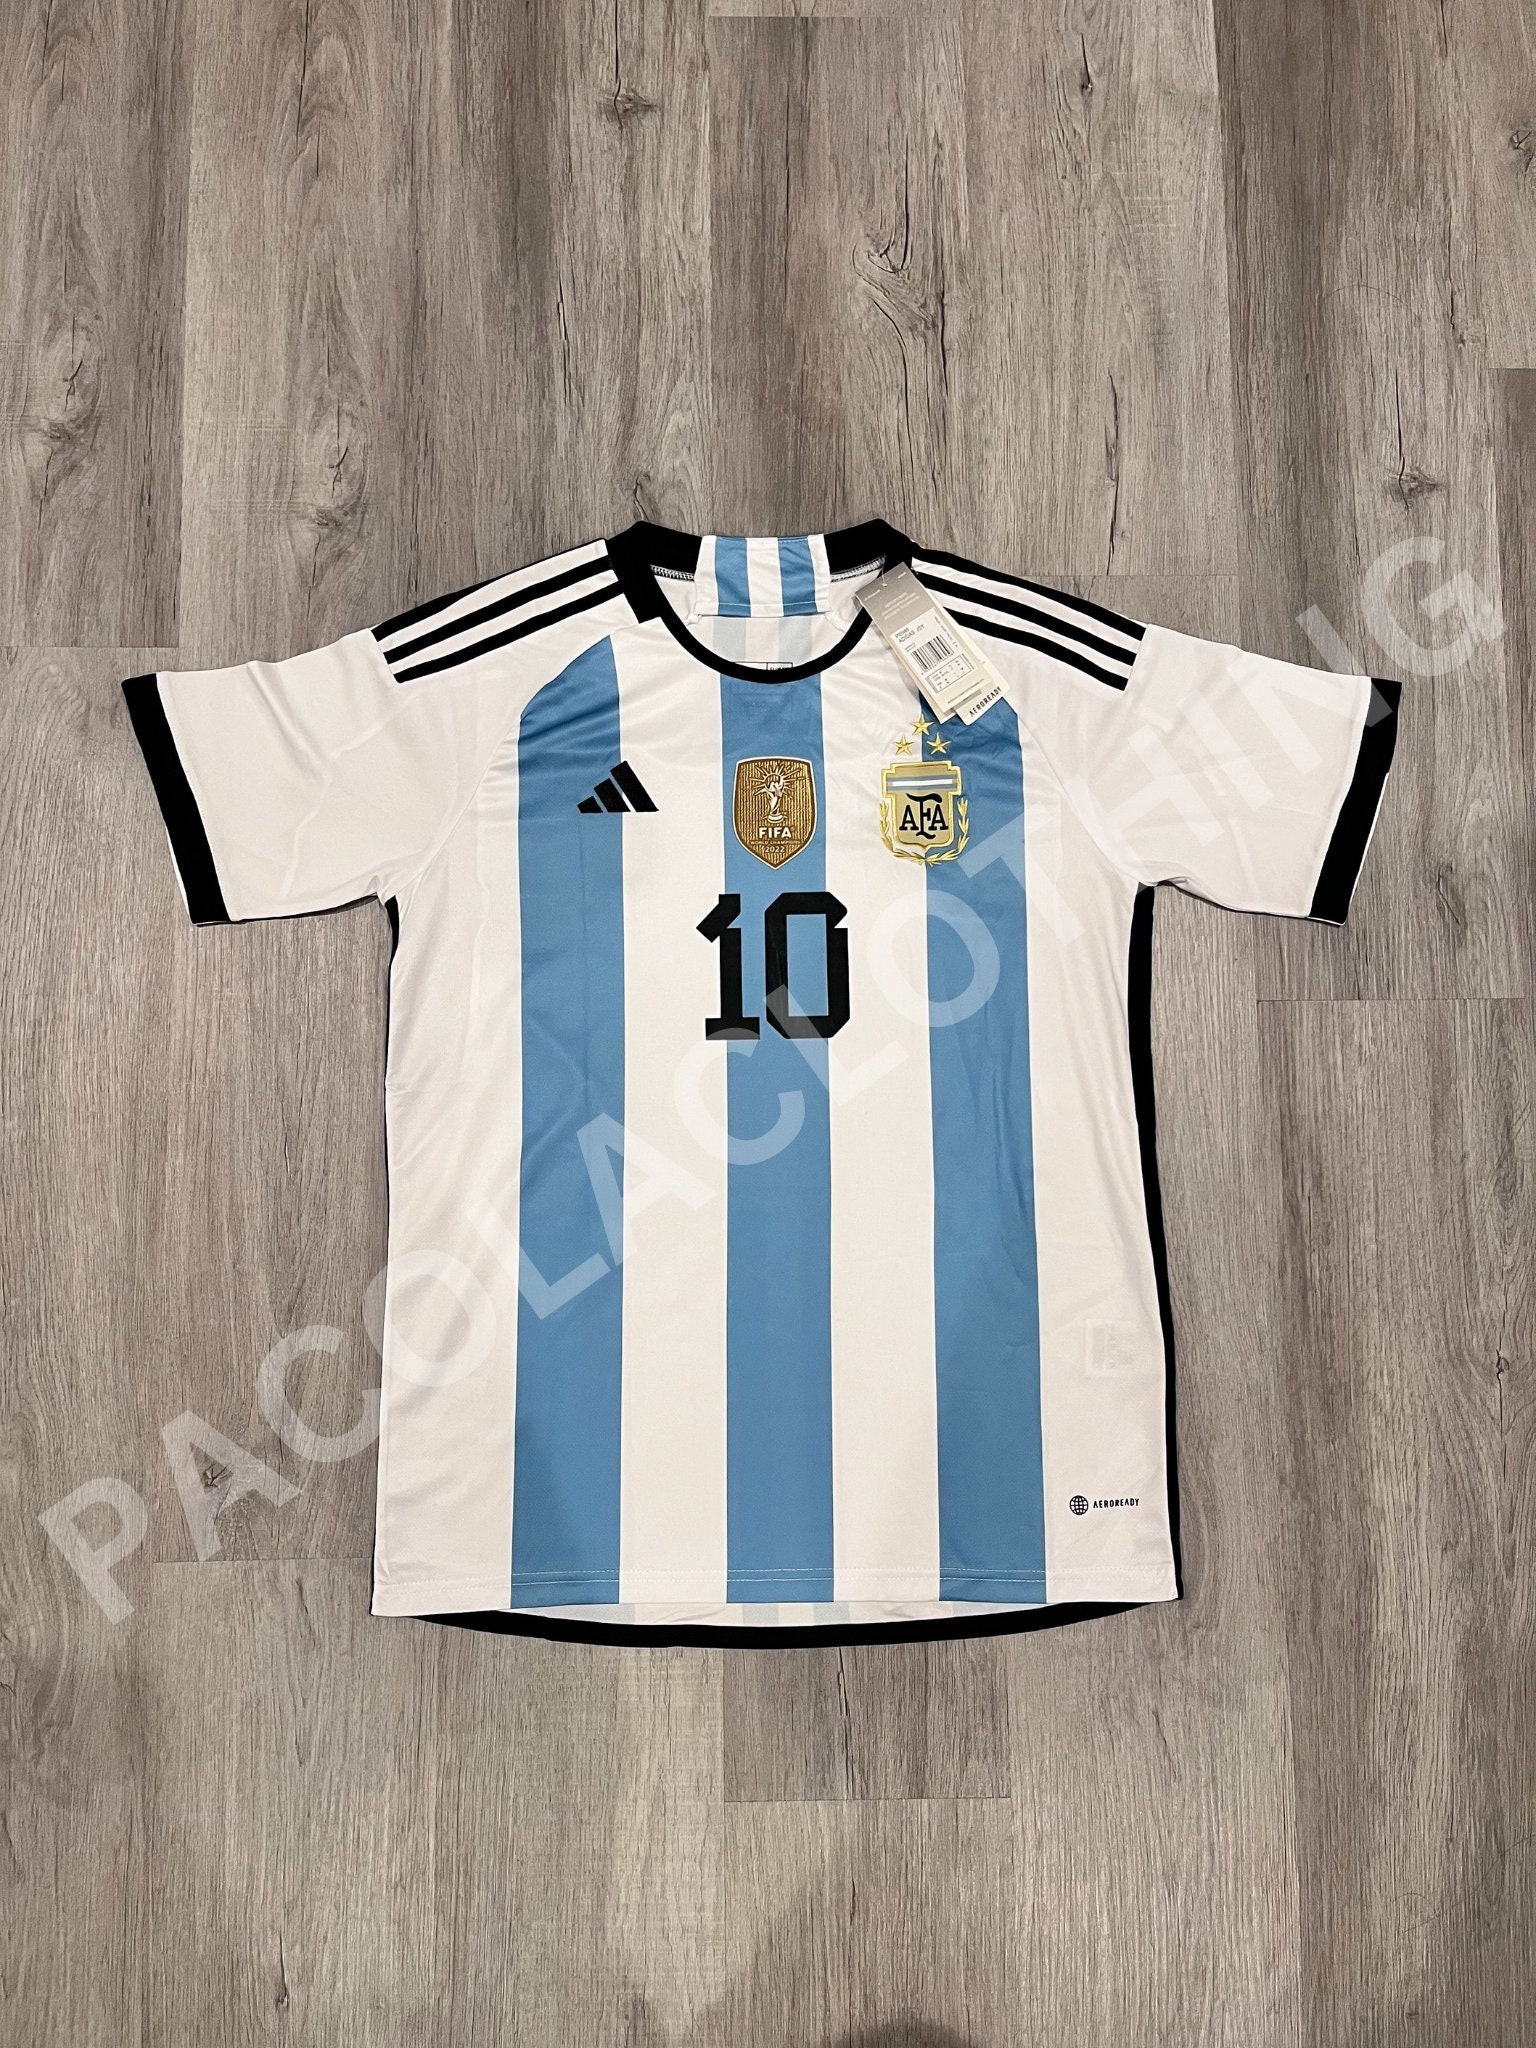 3 Stars Championship Version Lionel Messi Argentina #10 Leo Messi Soccer Football Jersey